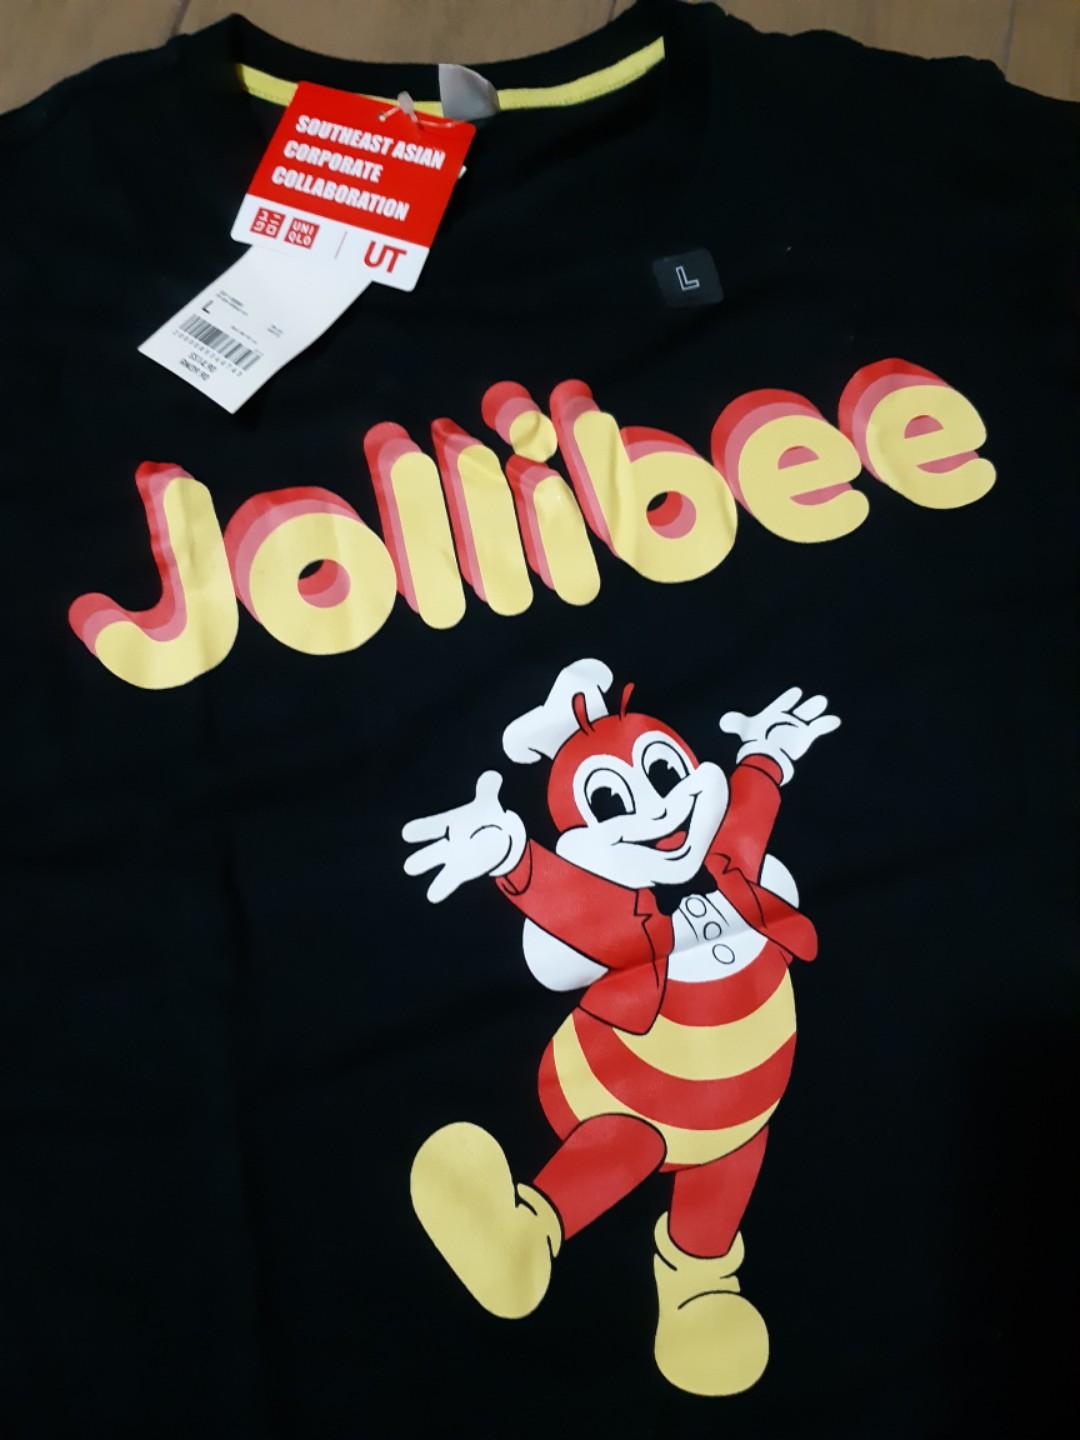 Uniqlo Jollibee Tshirt Women S Fashion Tops Shirts On Carousell